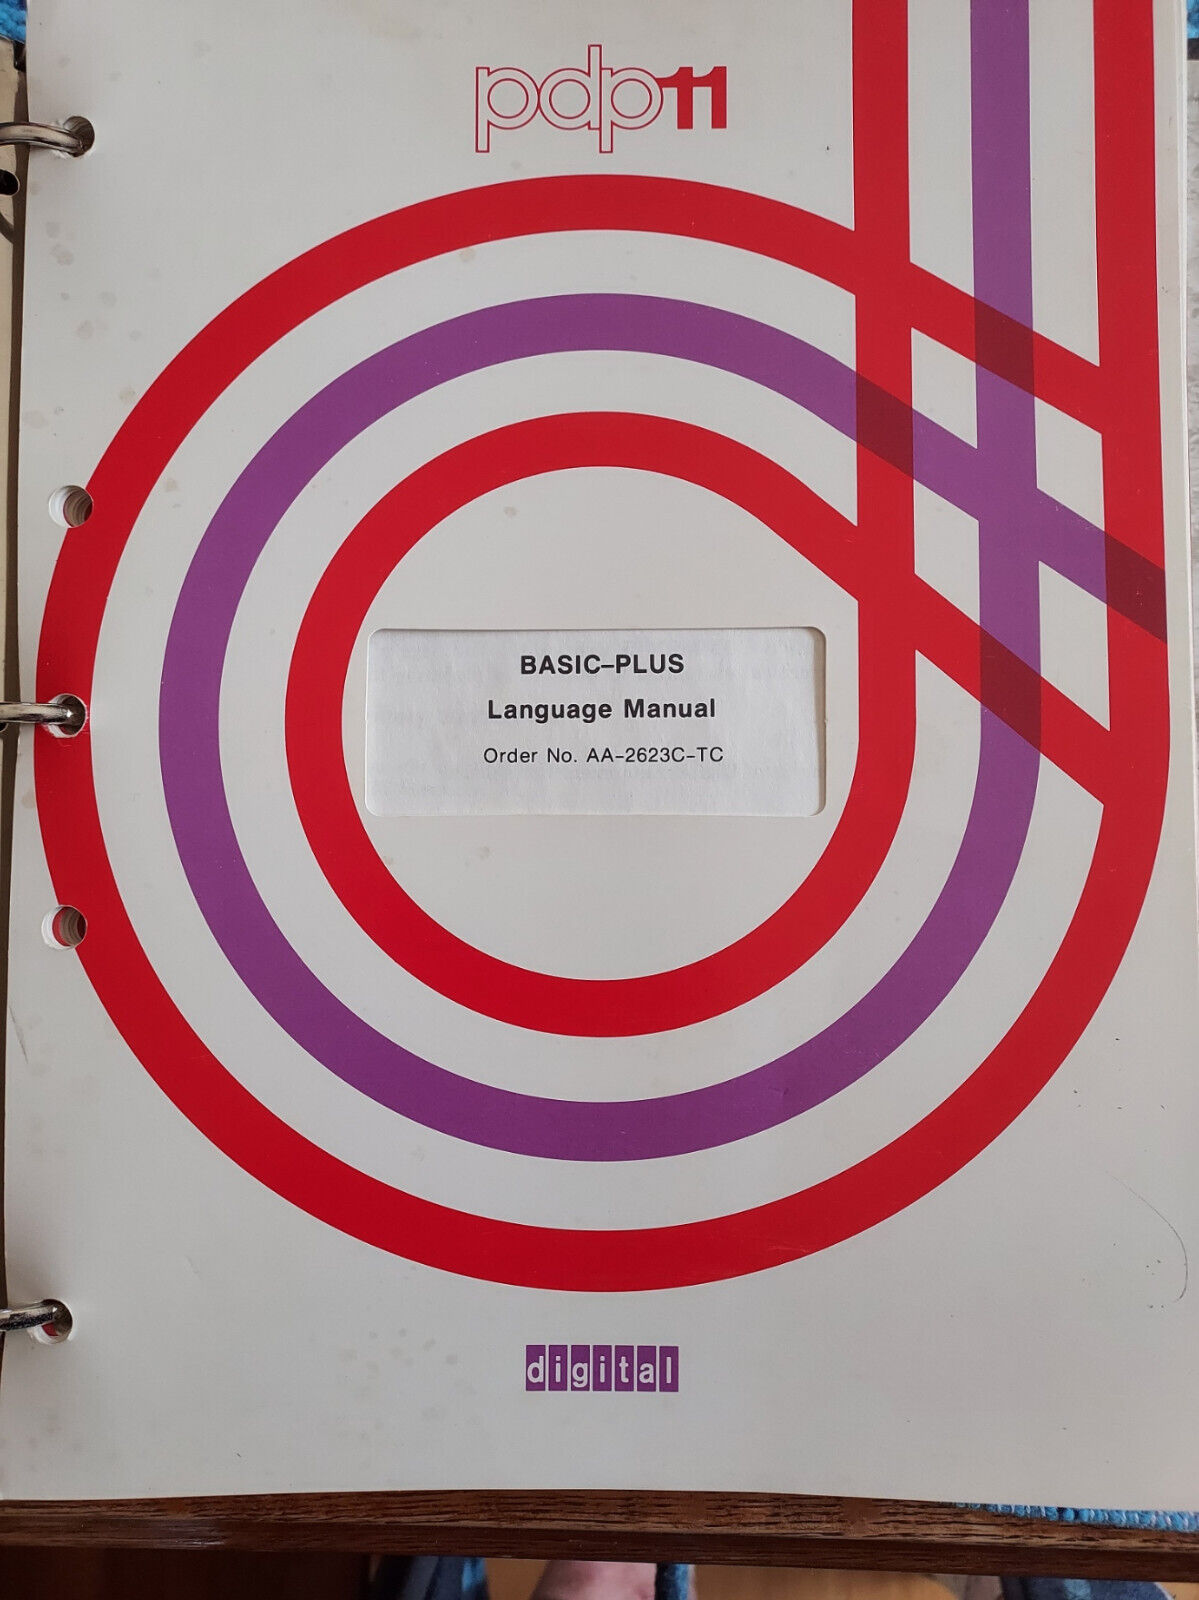 Vintage 1979 Digital DEC PDP 11 Basic-Plus Software Manual